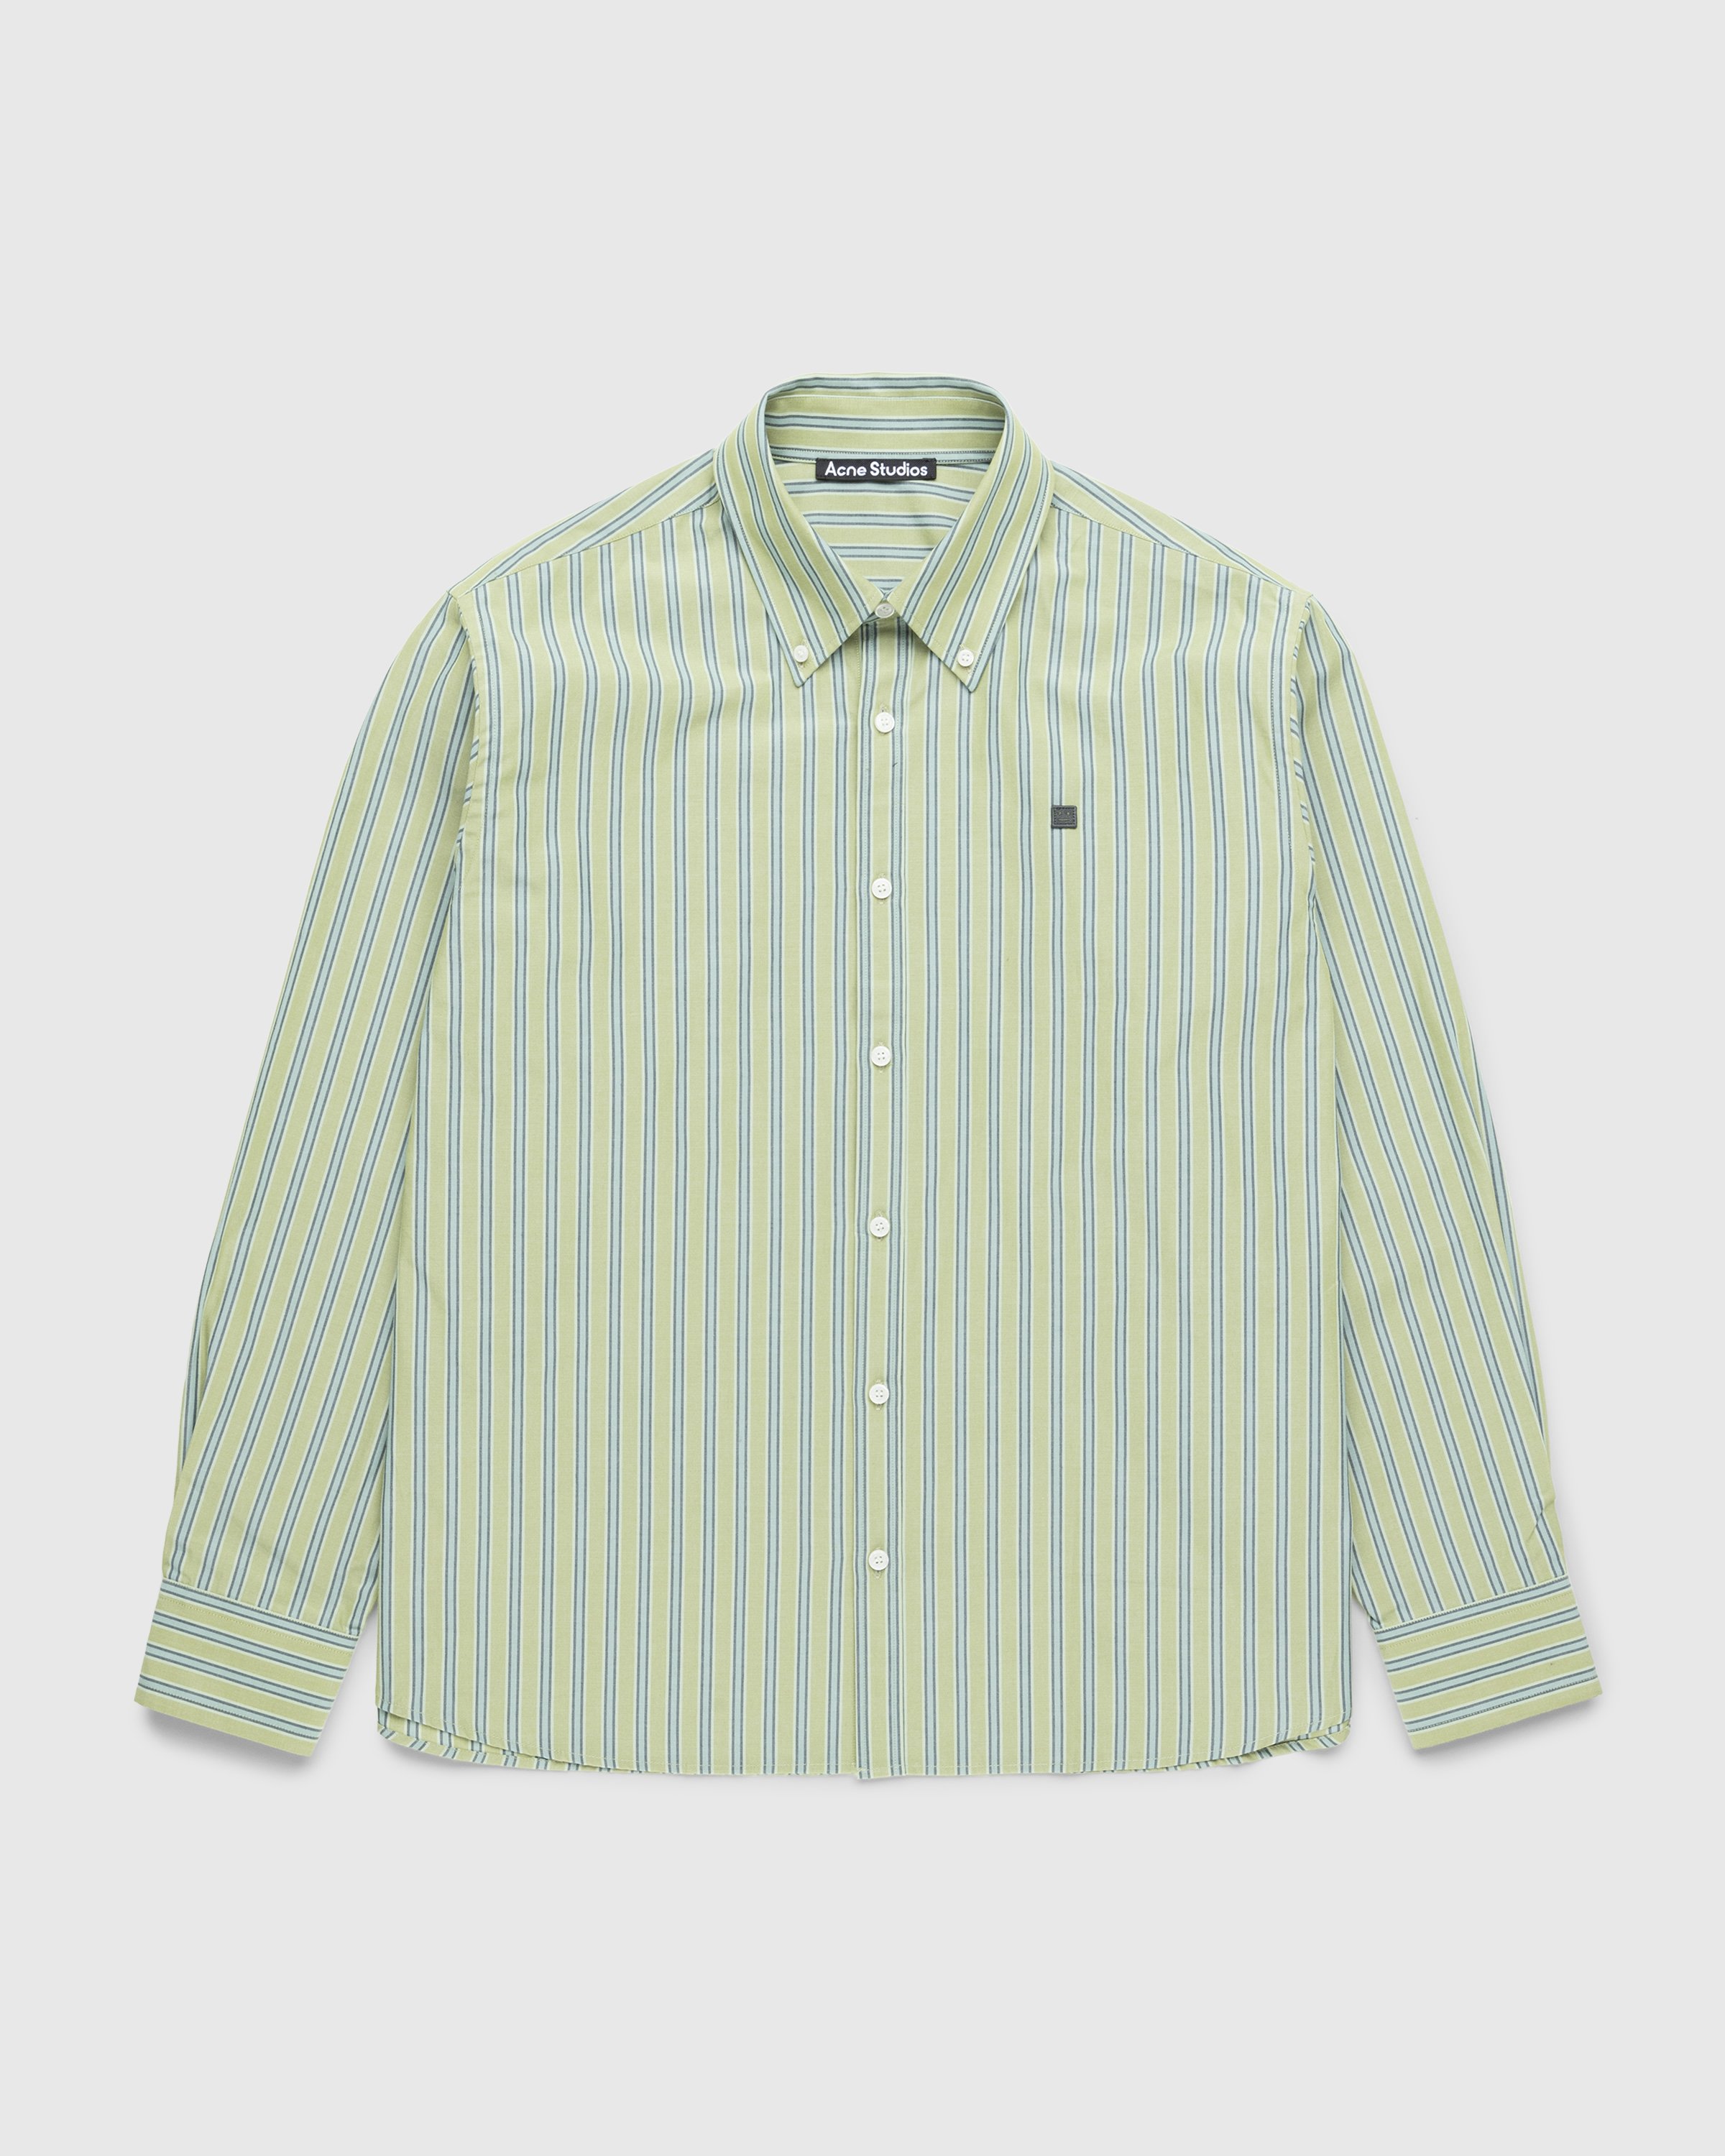 Acne Studios - Stripe Button-Up Shirt Bright Green/Dark Green - Longsleeve Shirts - Green - Image 1